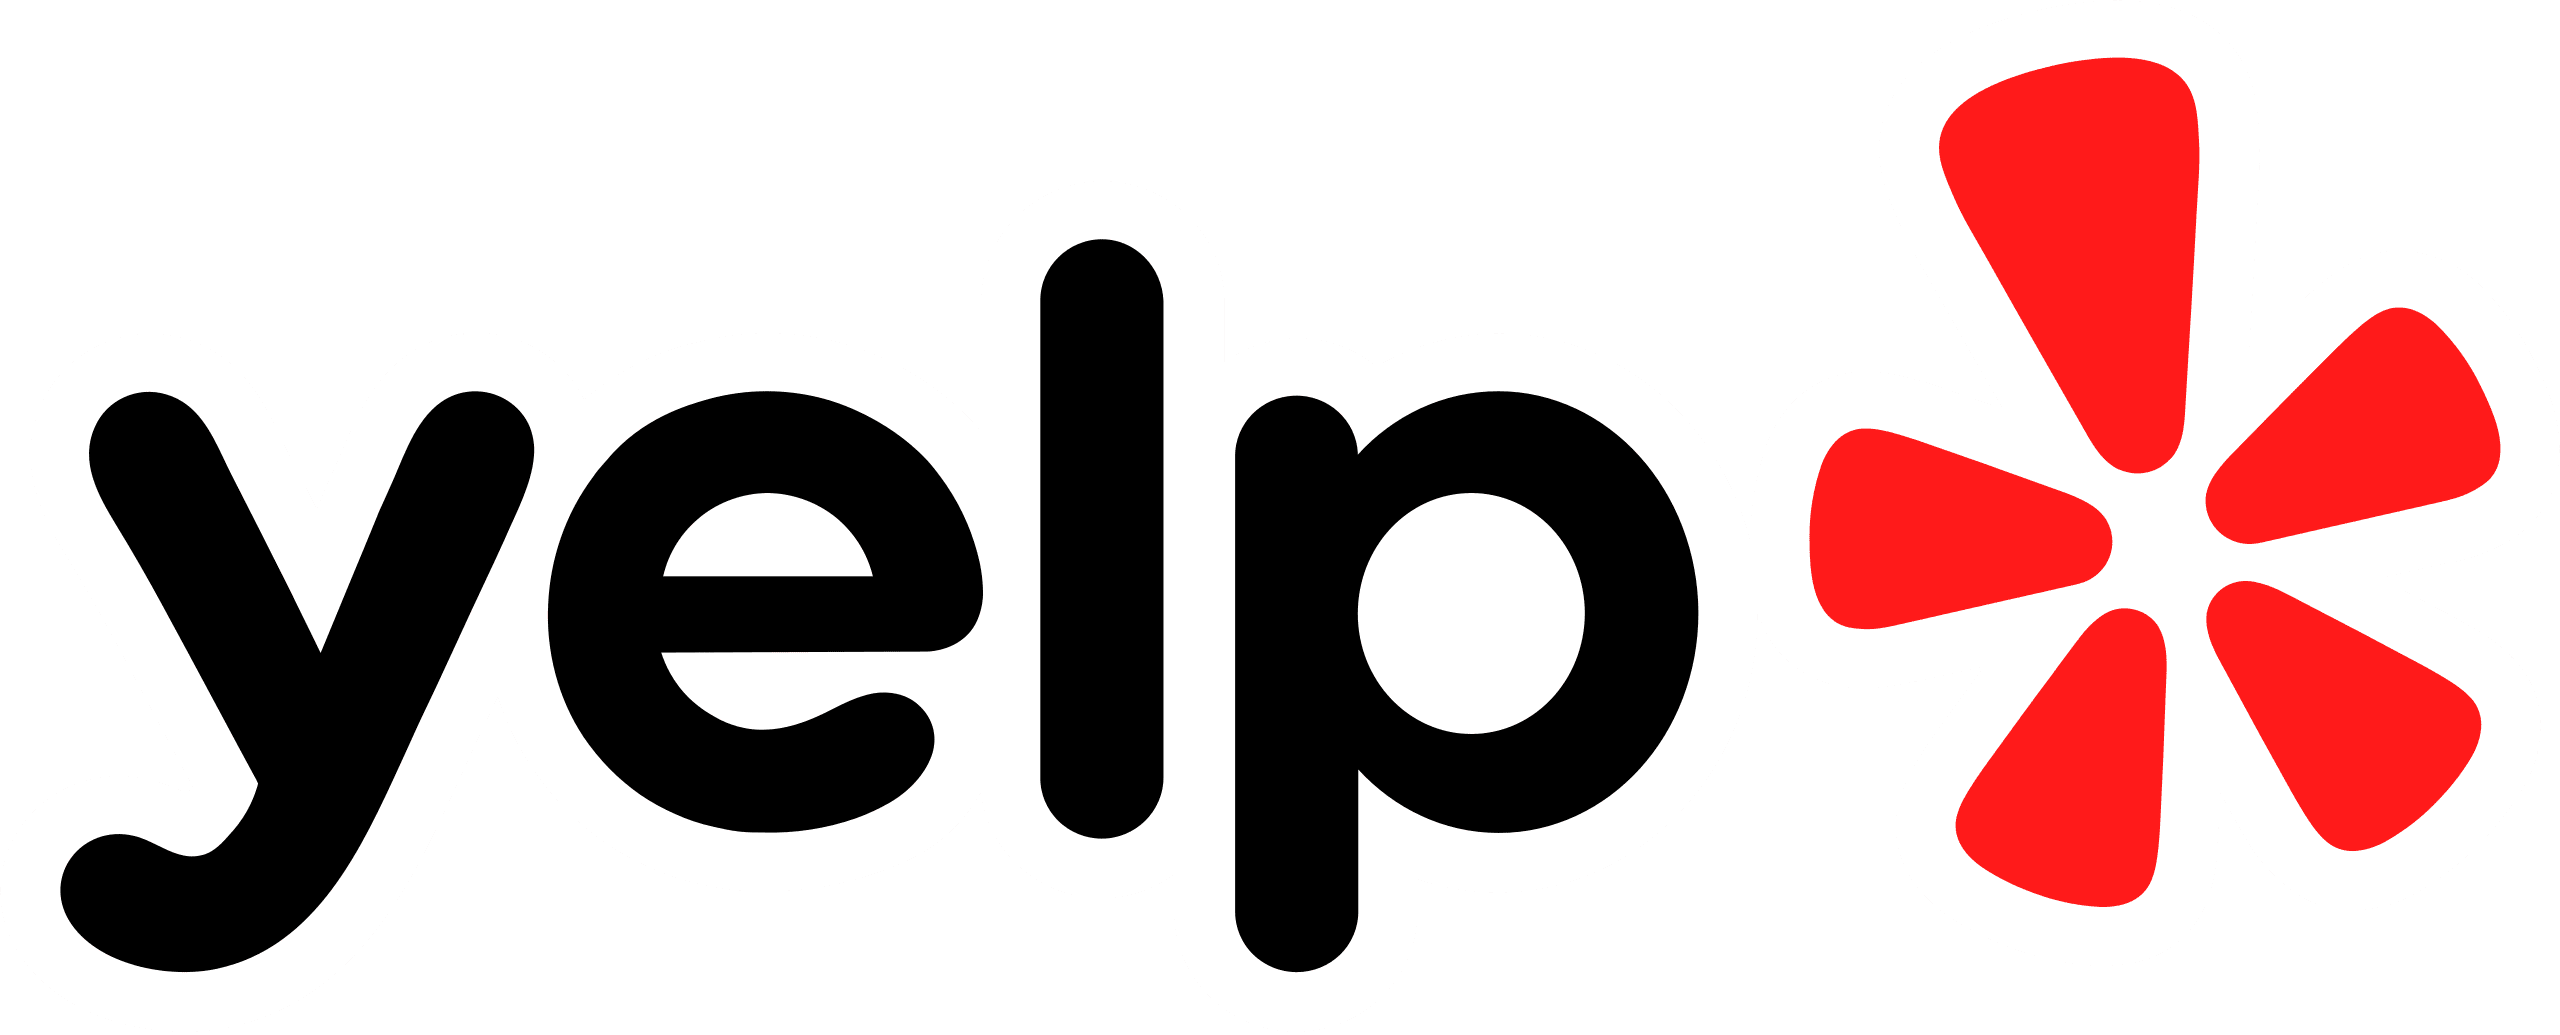 Logo Yelp.svg